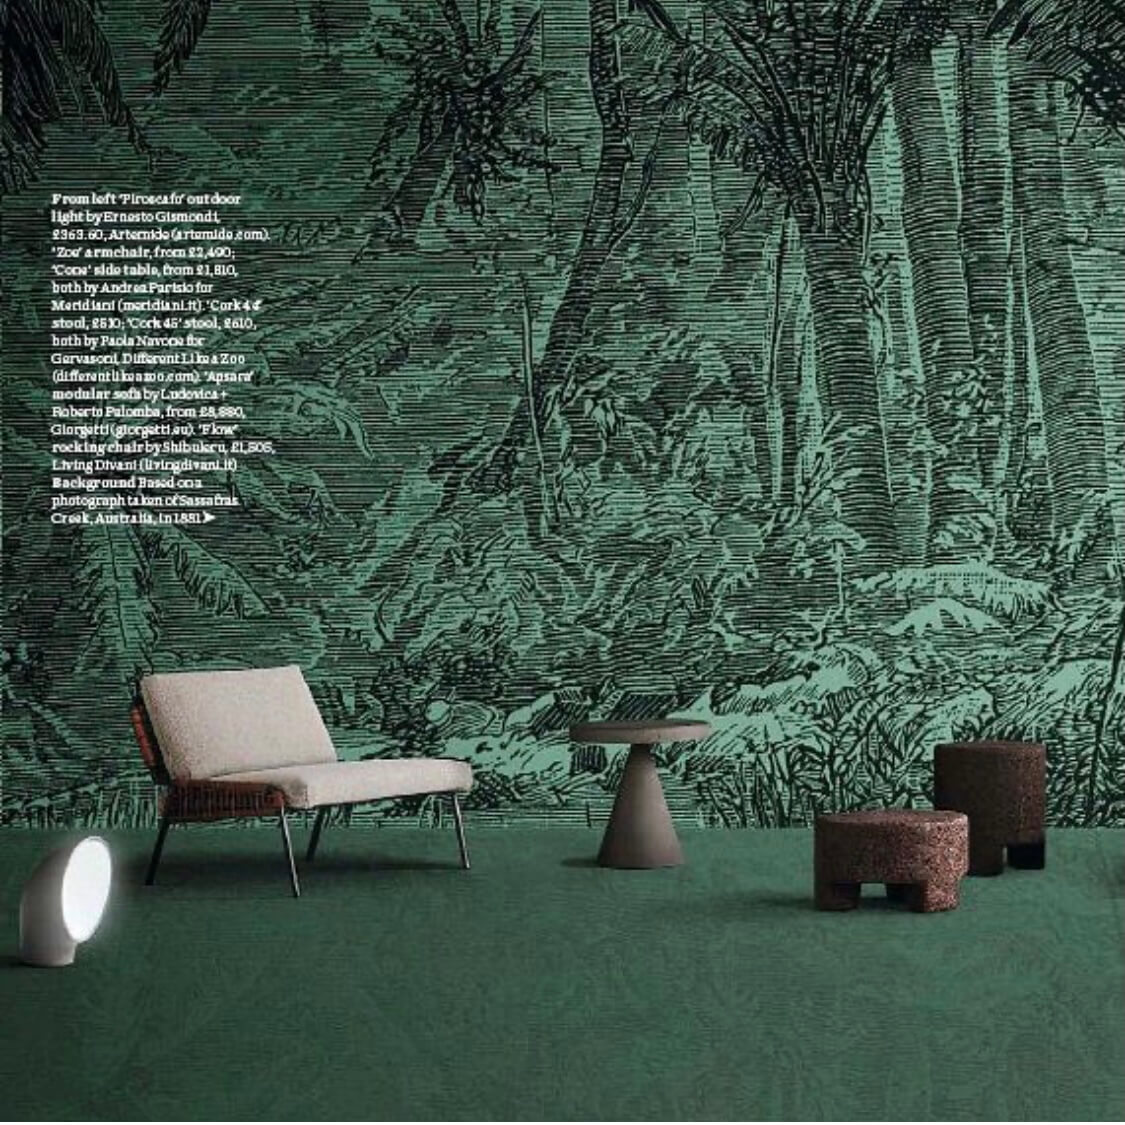 gervasoni's outdoor furniture in elle decoration